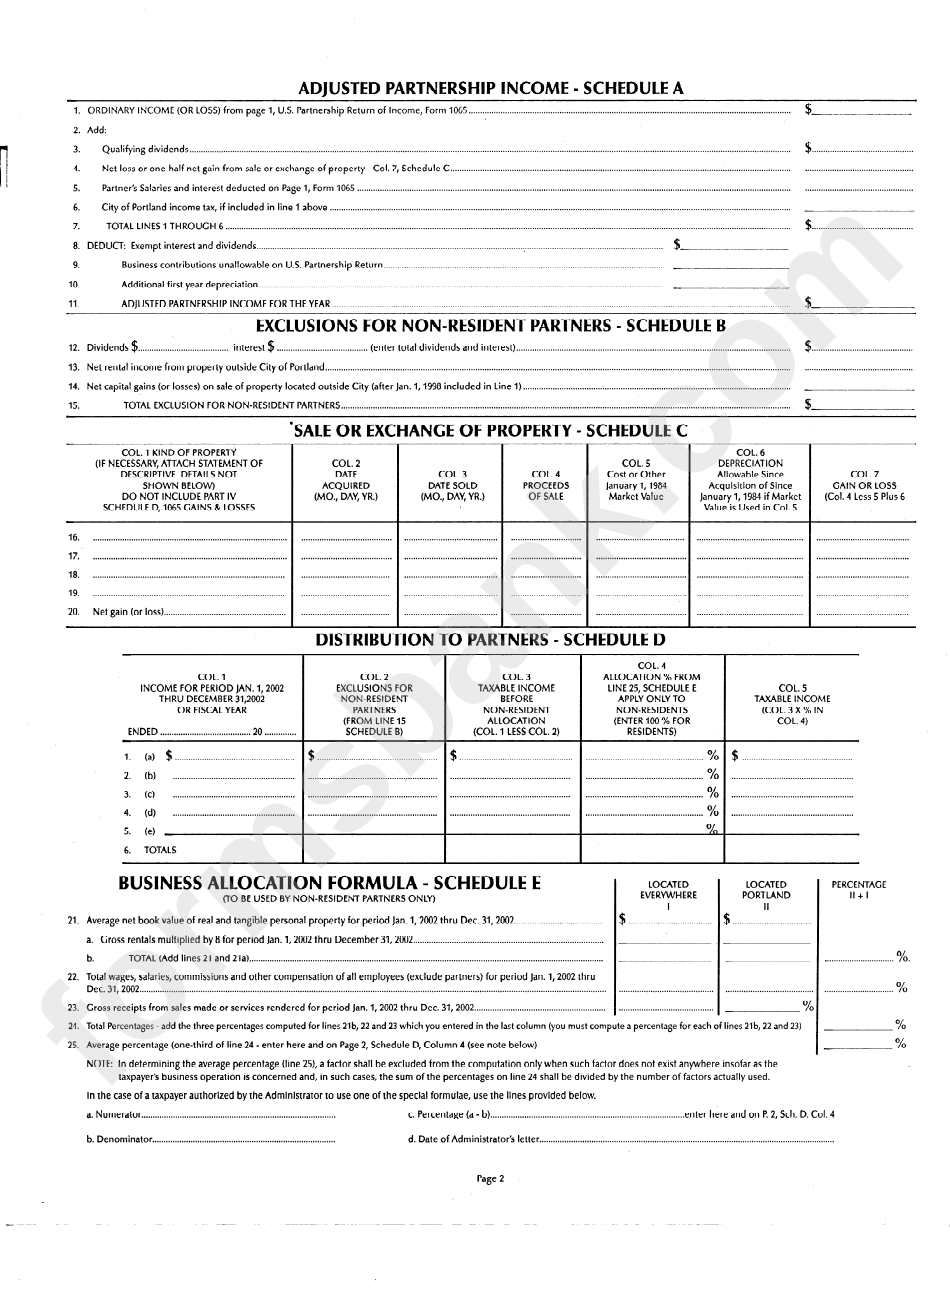 Form P1065 - City Of Portland Income Tax Partnership Return - 2002